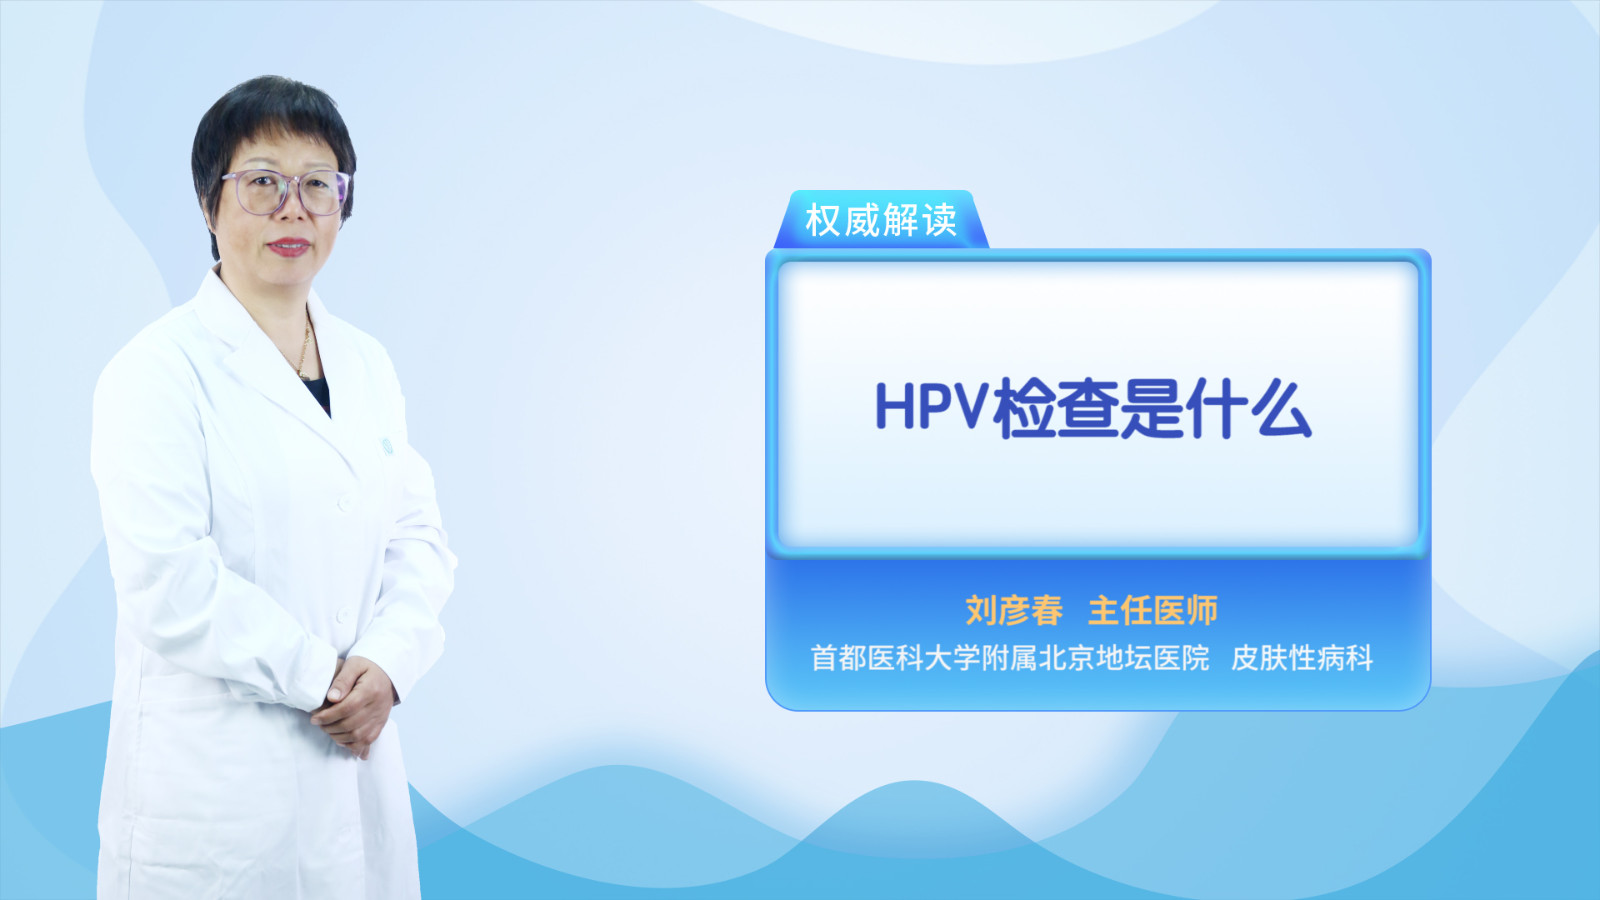 HPV检查是什么